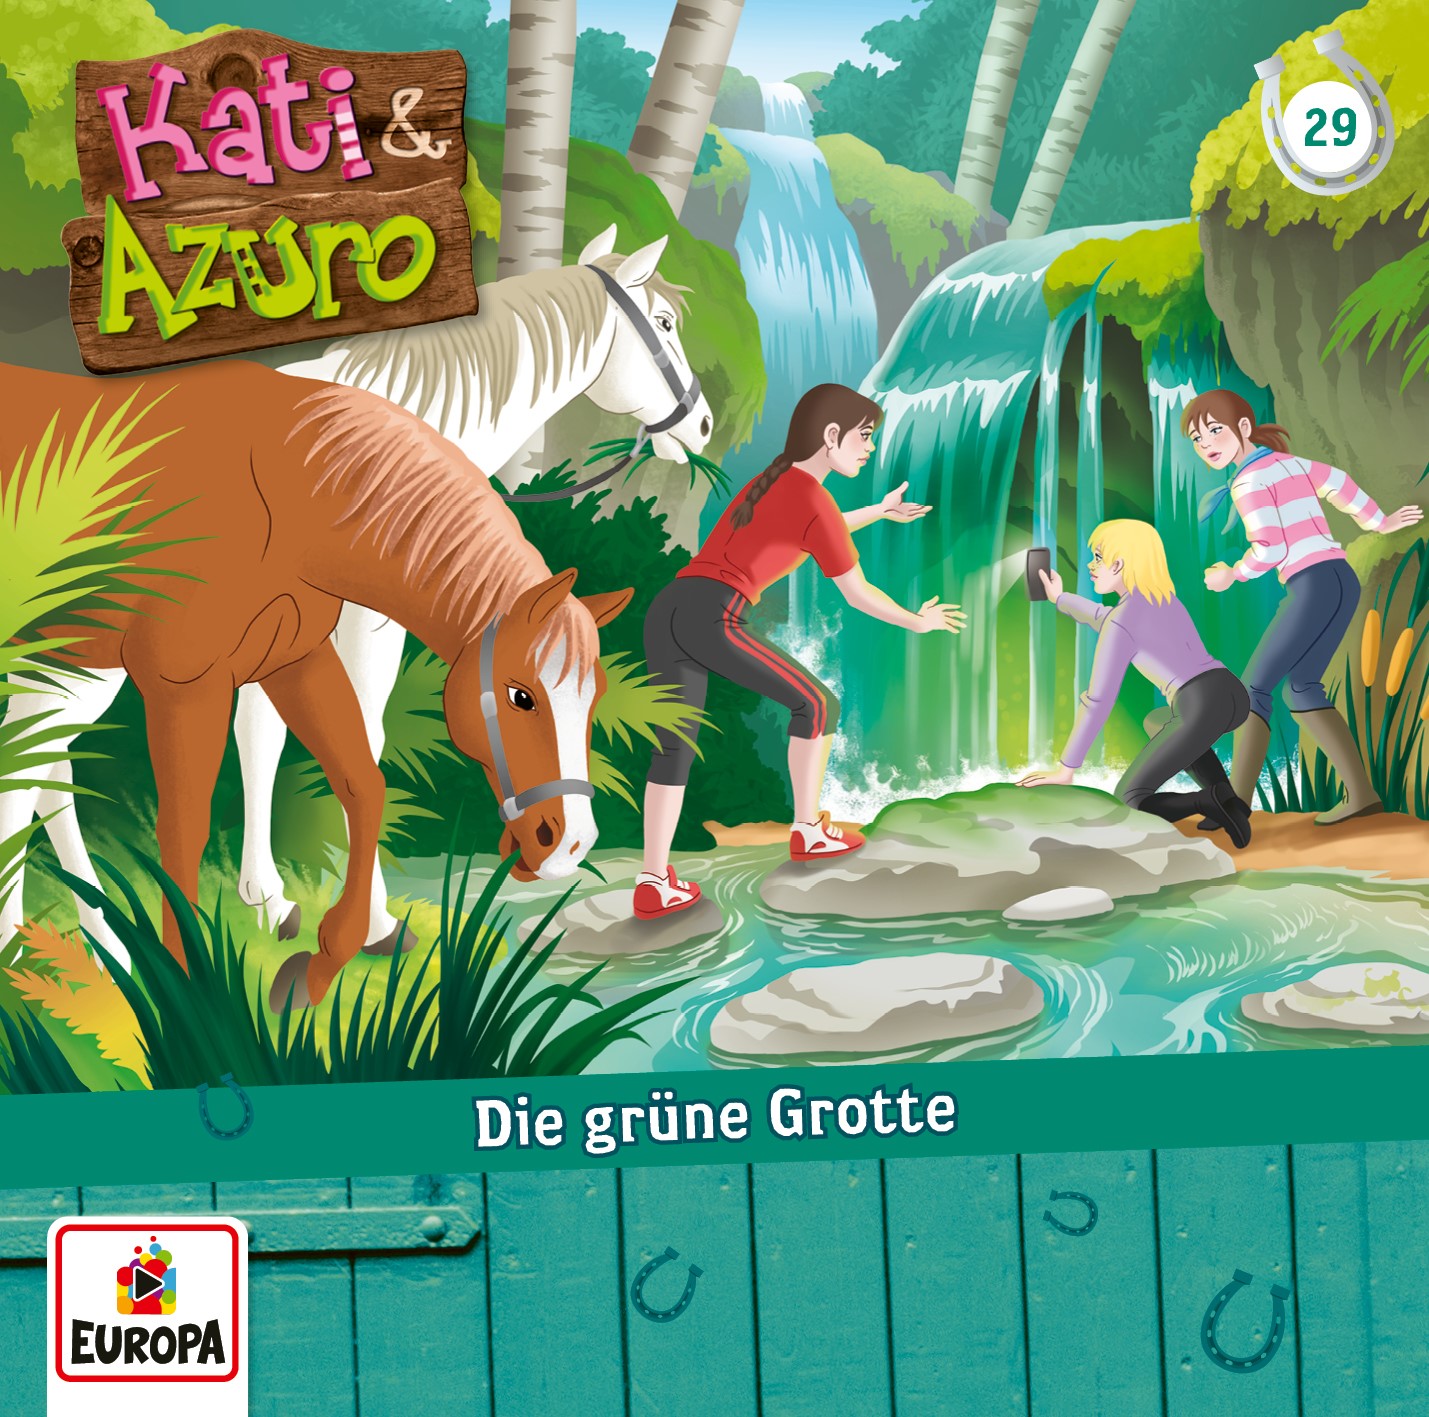 Kati & Azuro: Die grüne Grotte